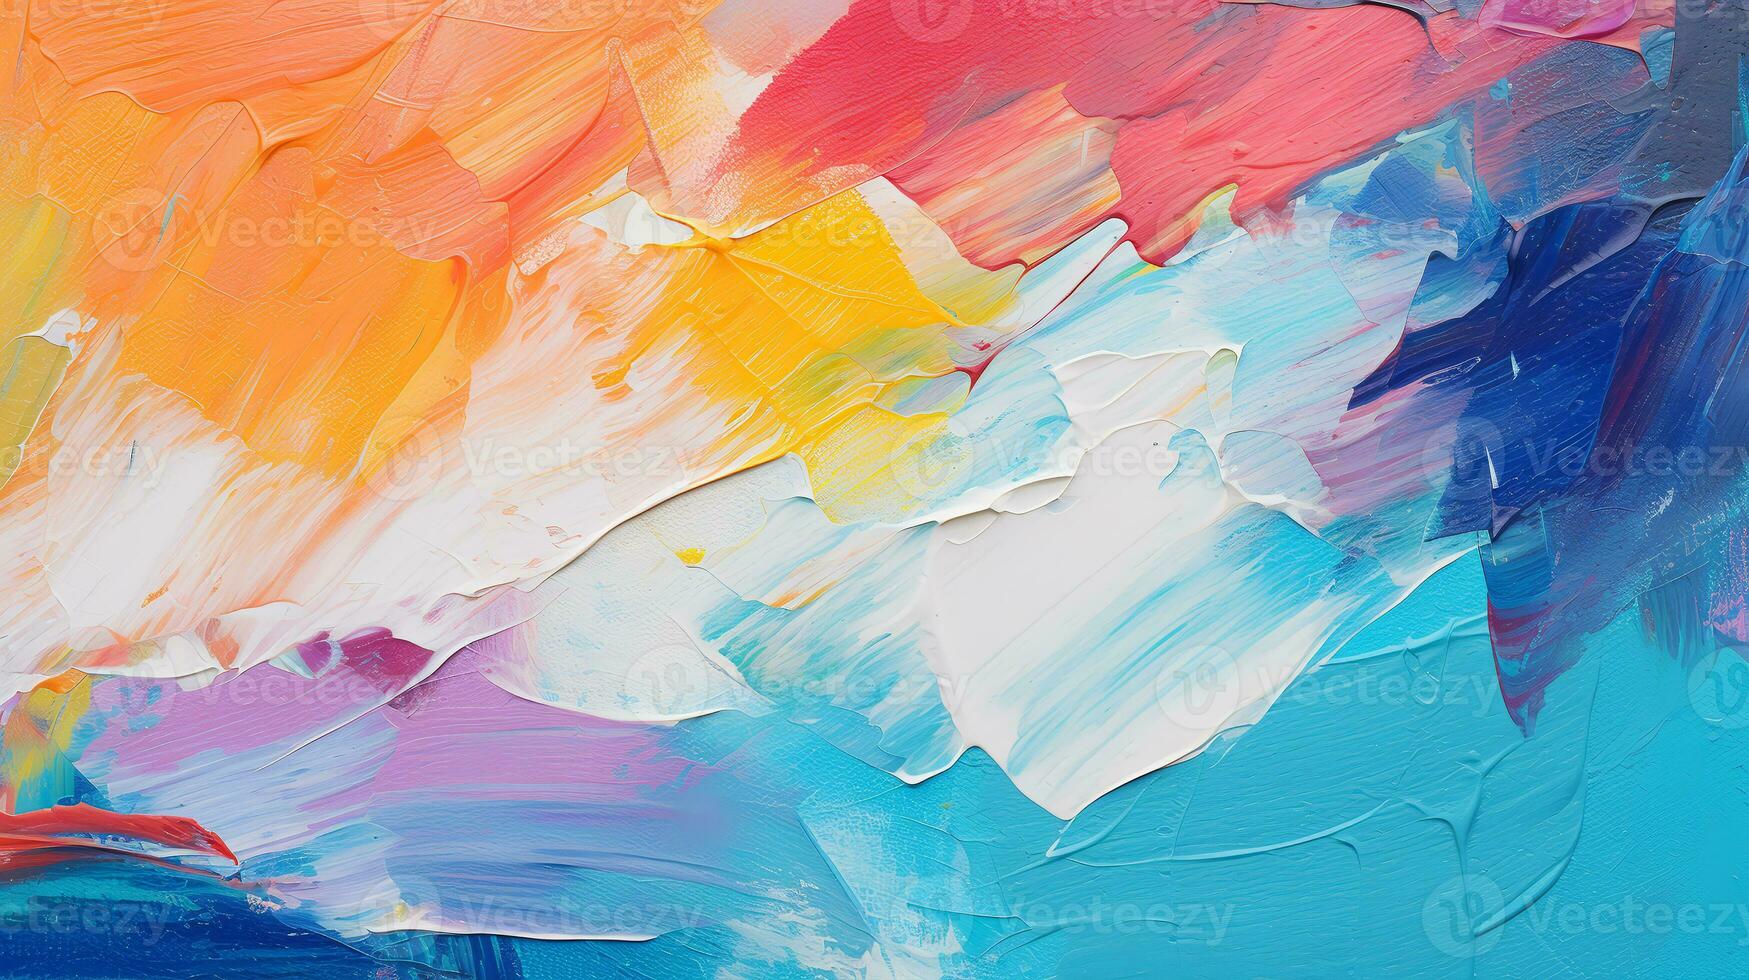 fechar-se do abstrato rude colorida multicolorido arte pintura textura, com óleo pincelada, palete faca pintura em tela. ai generativo foto